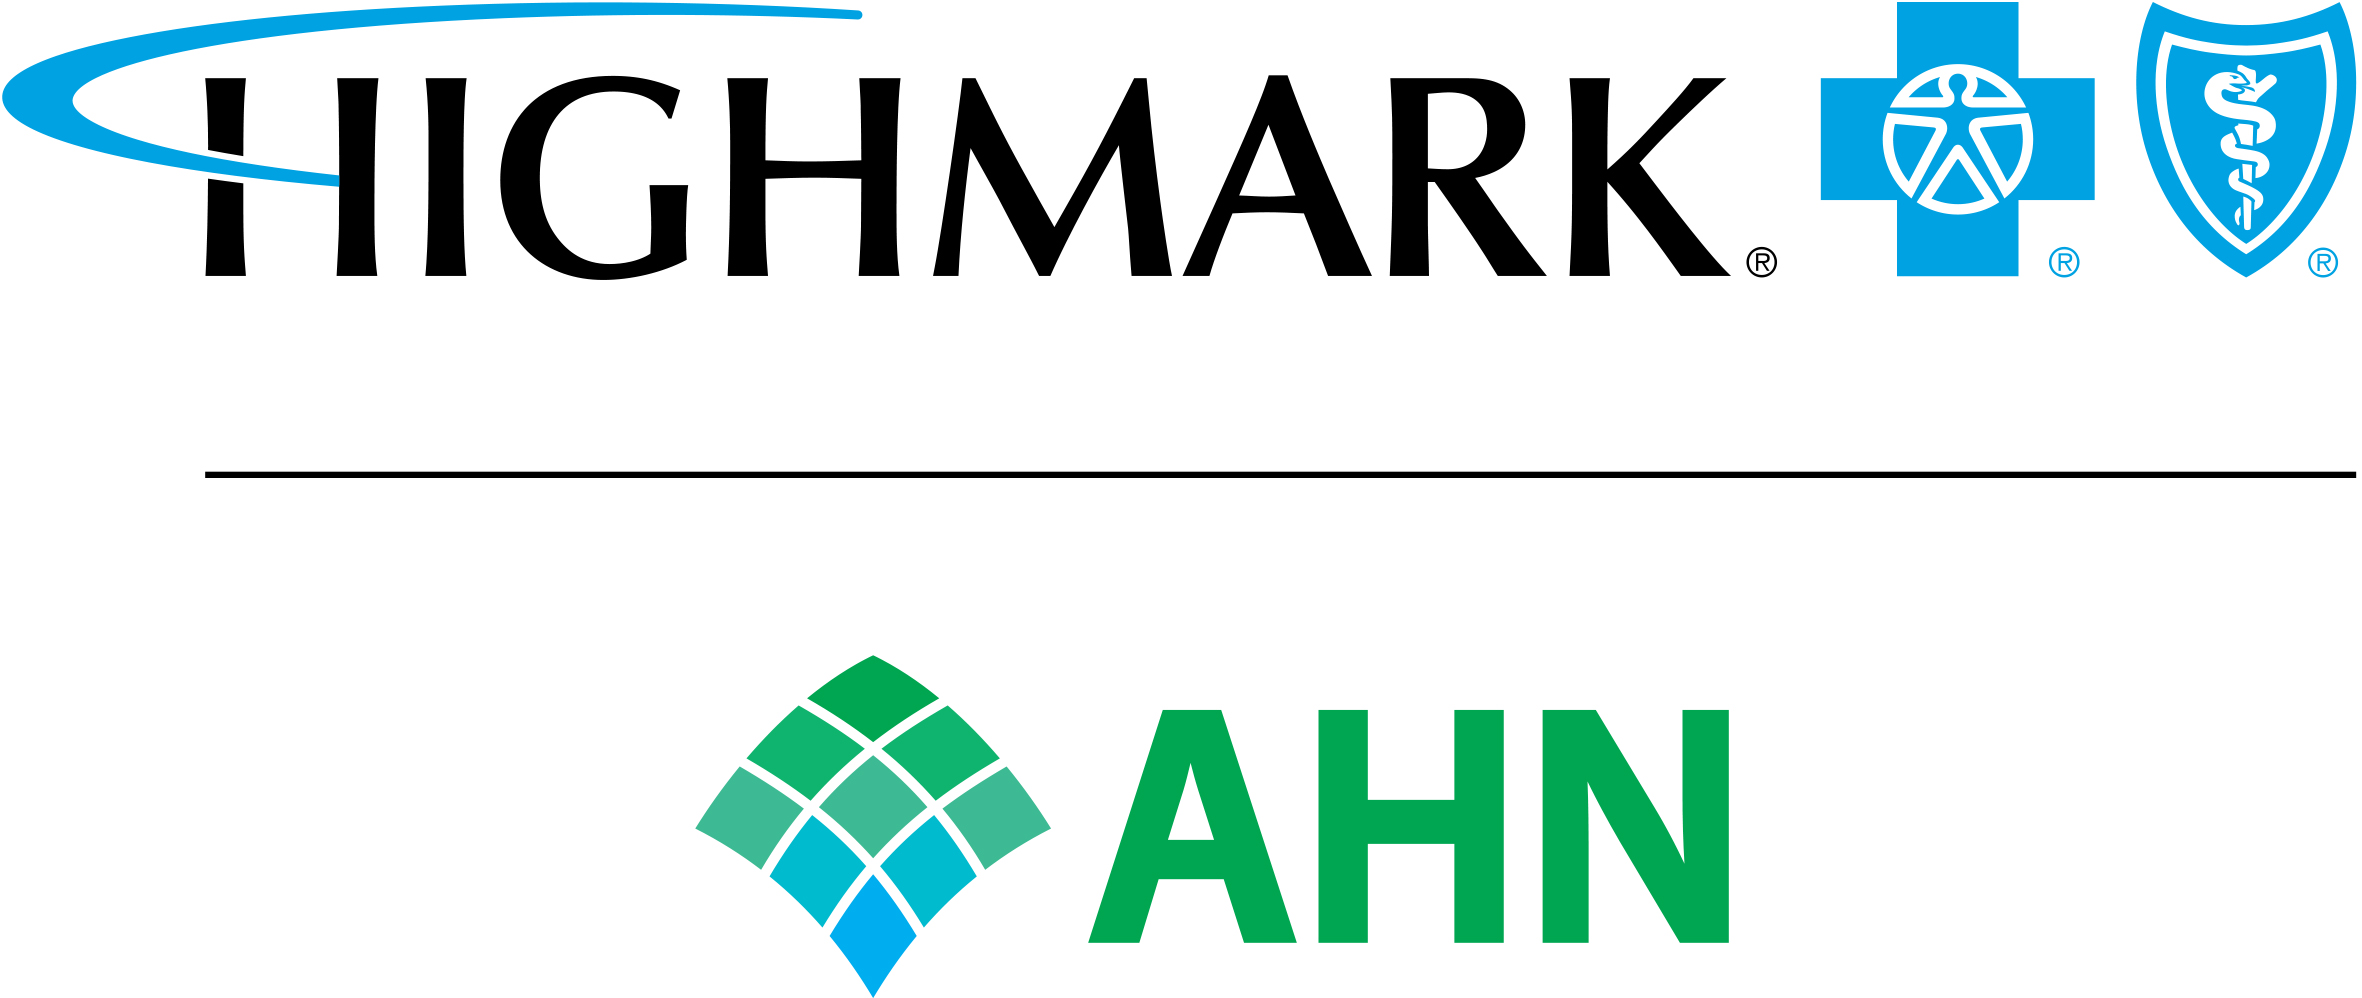 Highmark Health logo 2